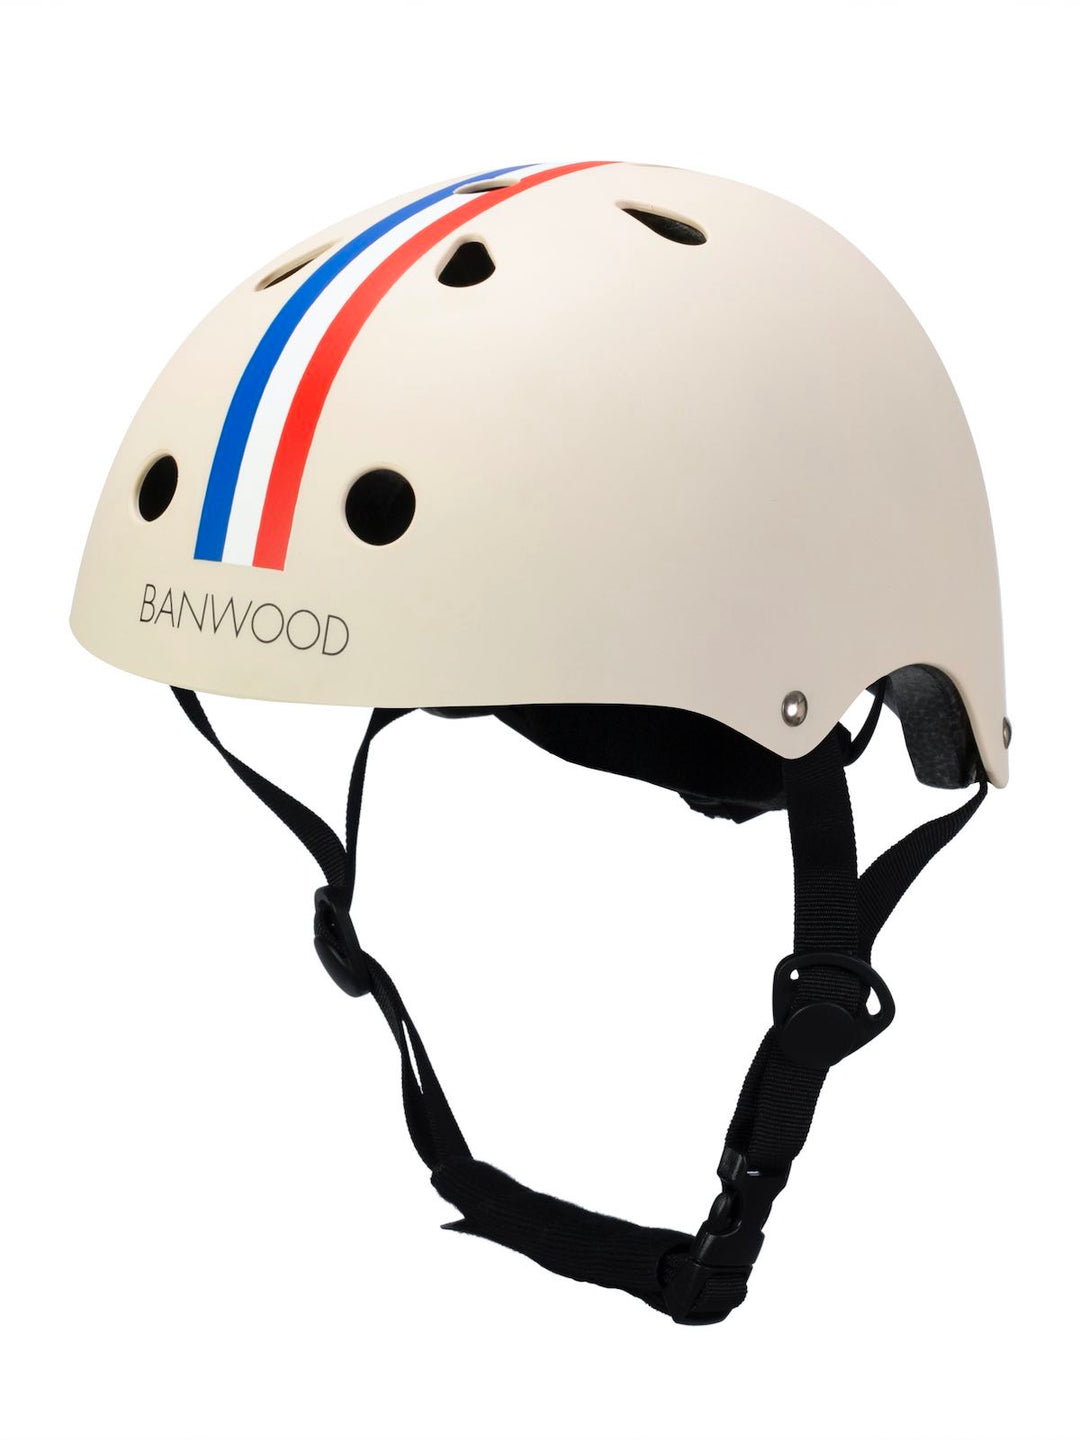 Banwood Classic Helmet with Stripes design